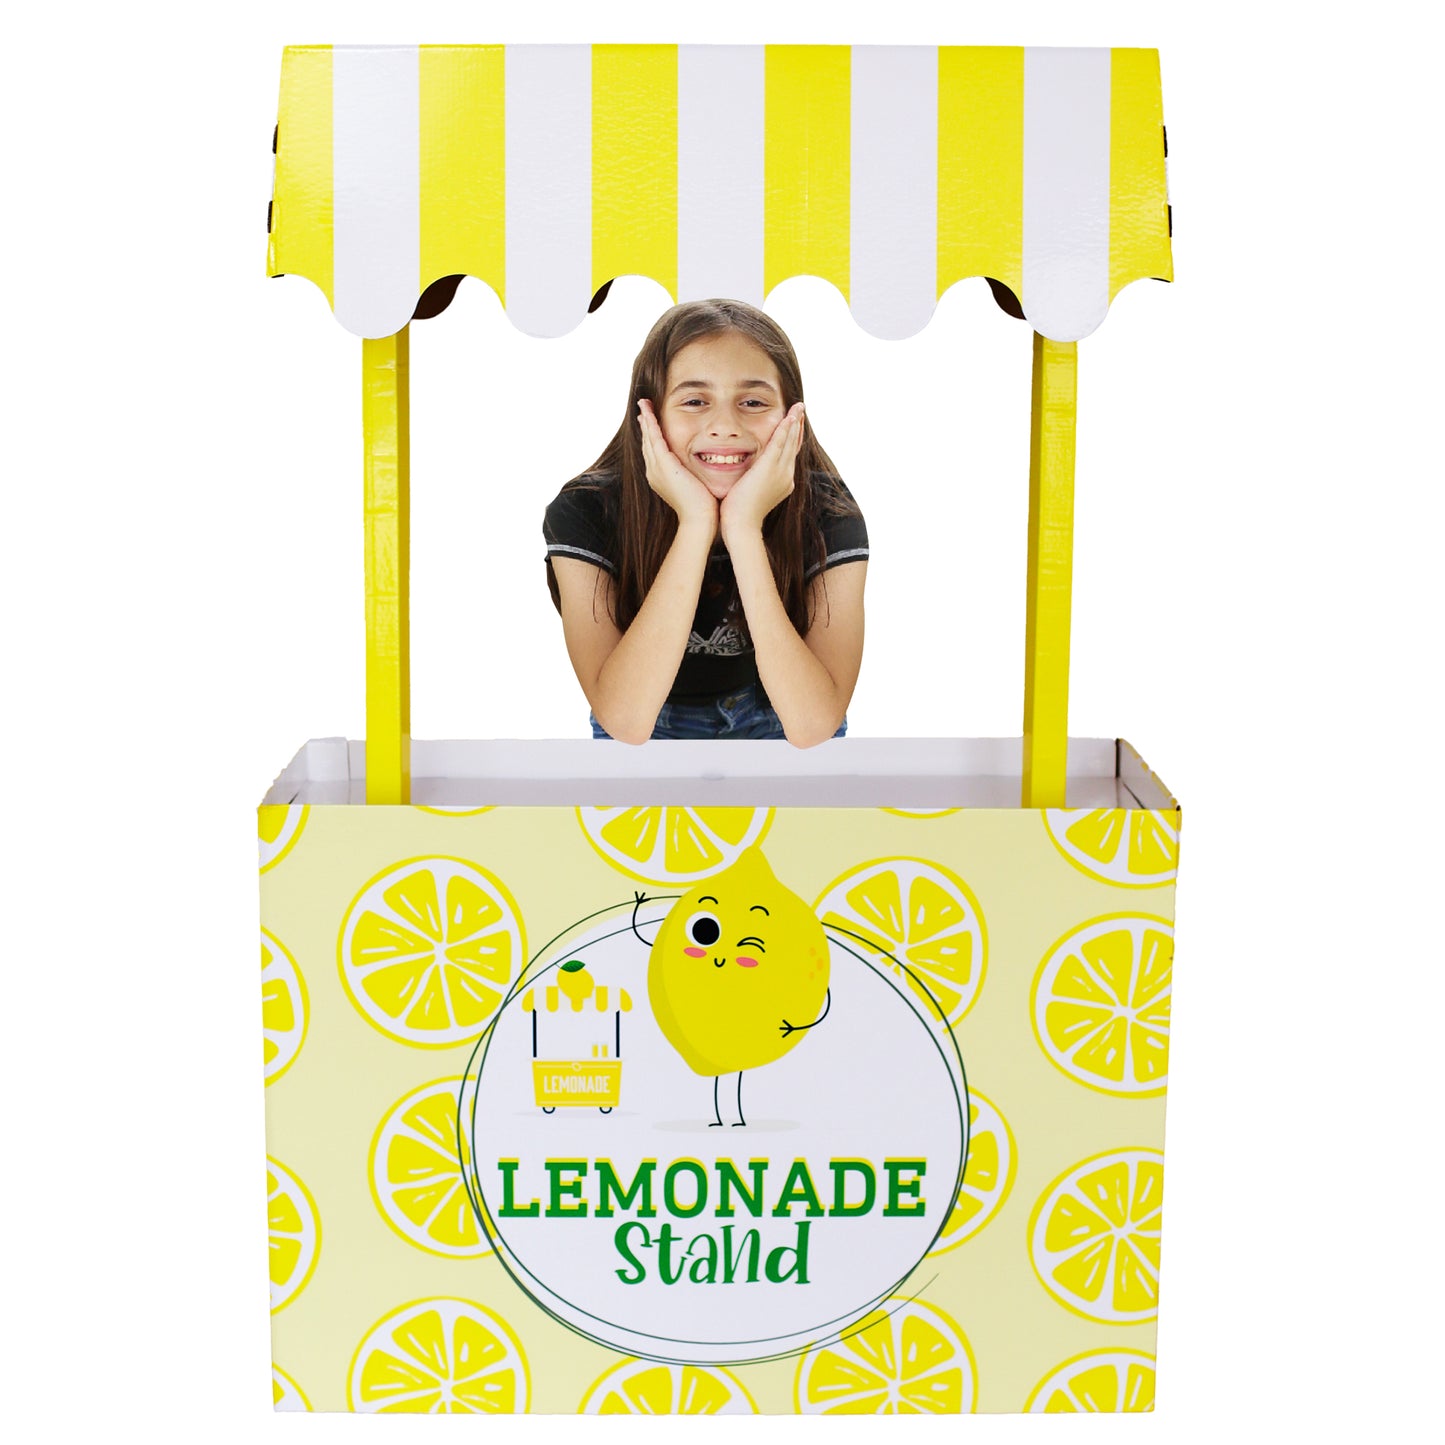 Kids' Cardboard Lemonade Stand - Premium, Portable, and Reusable.